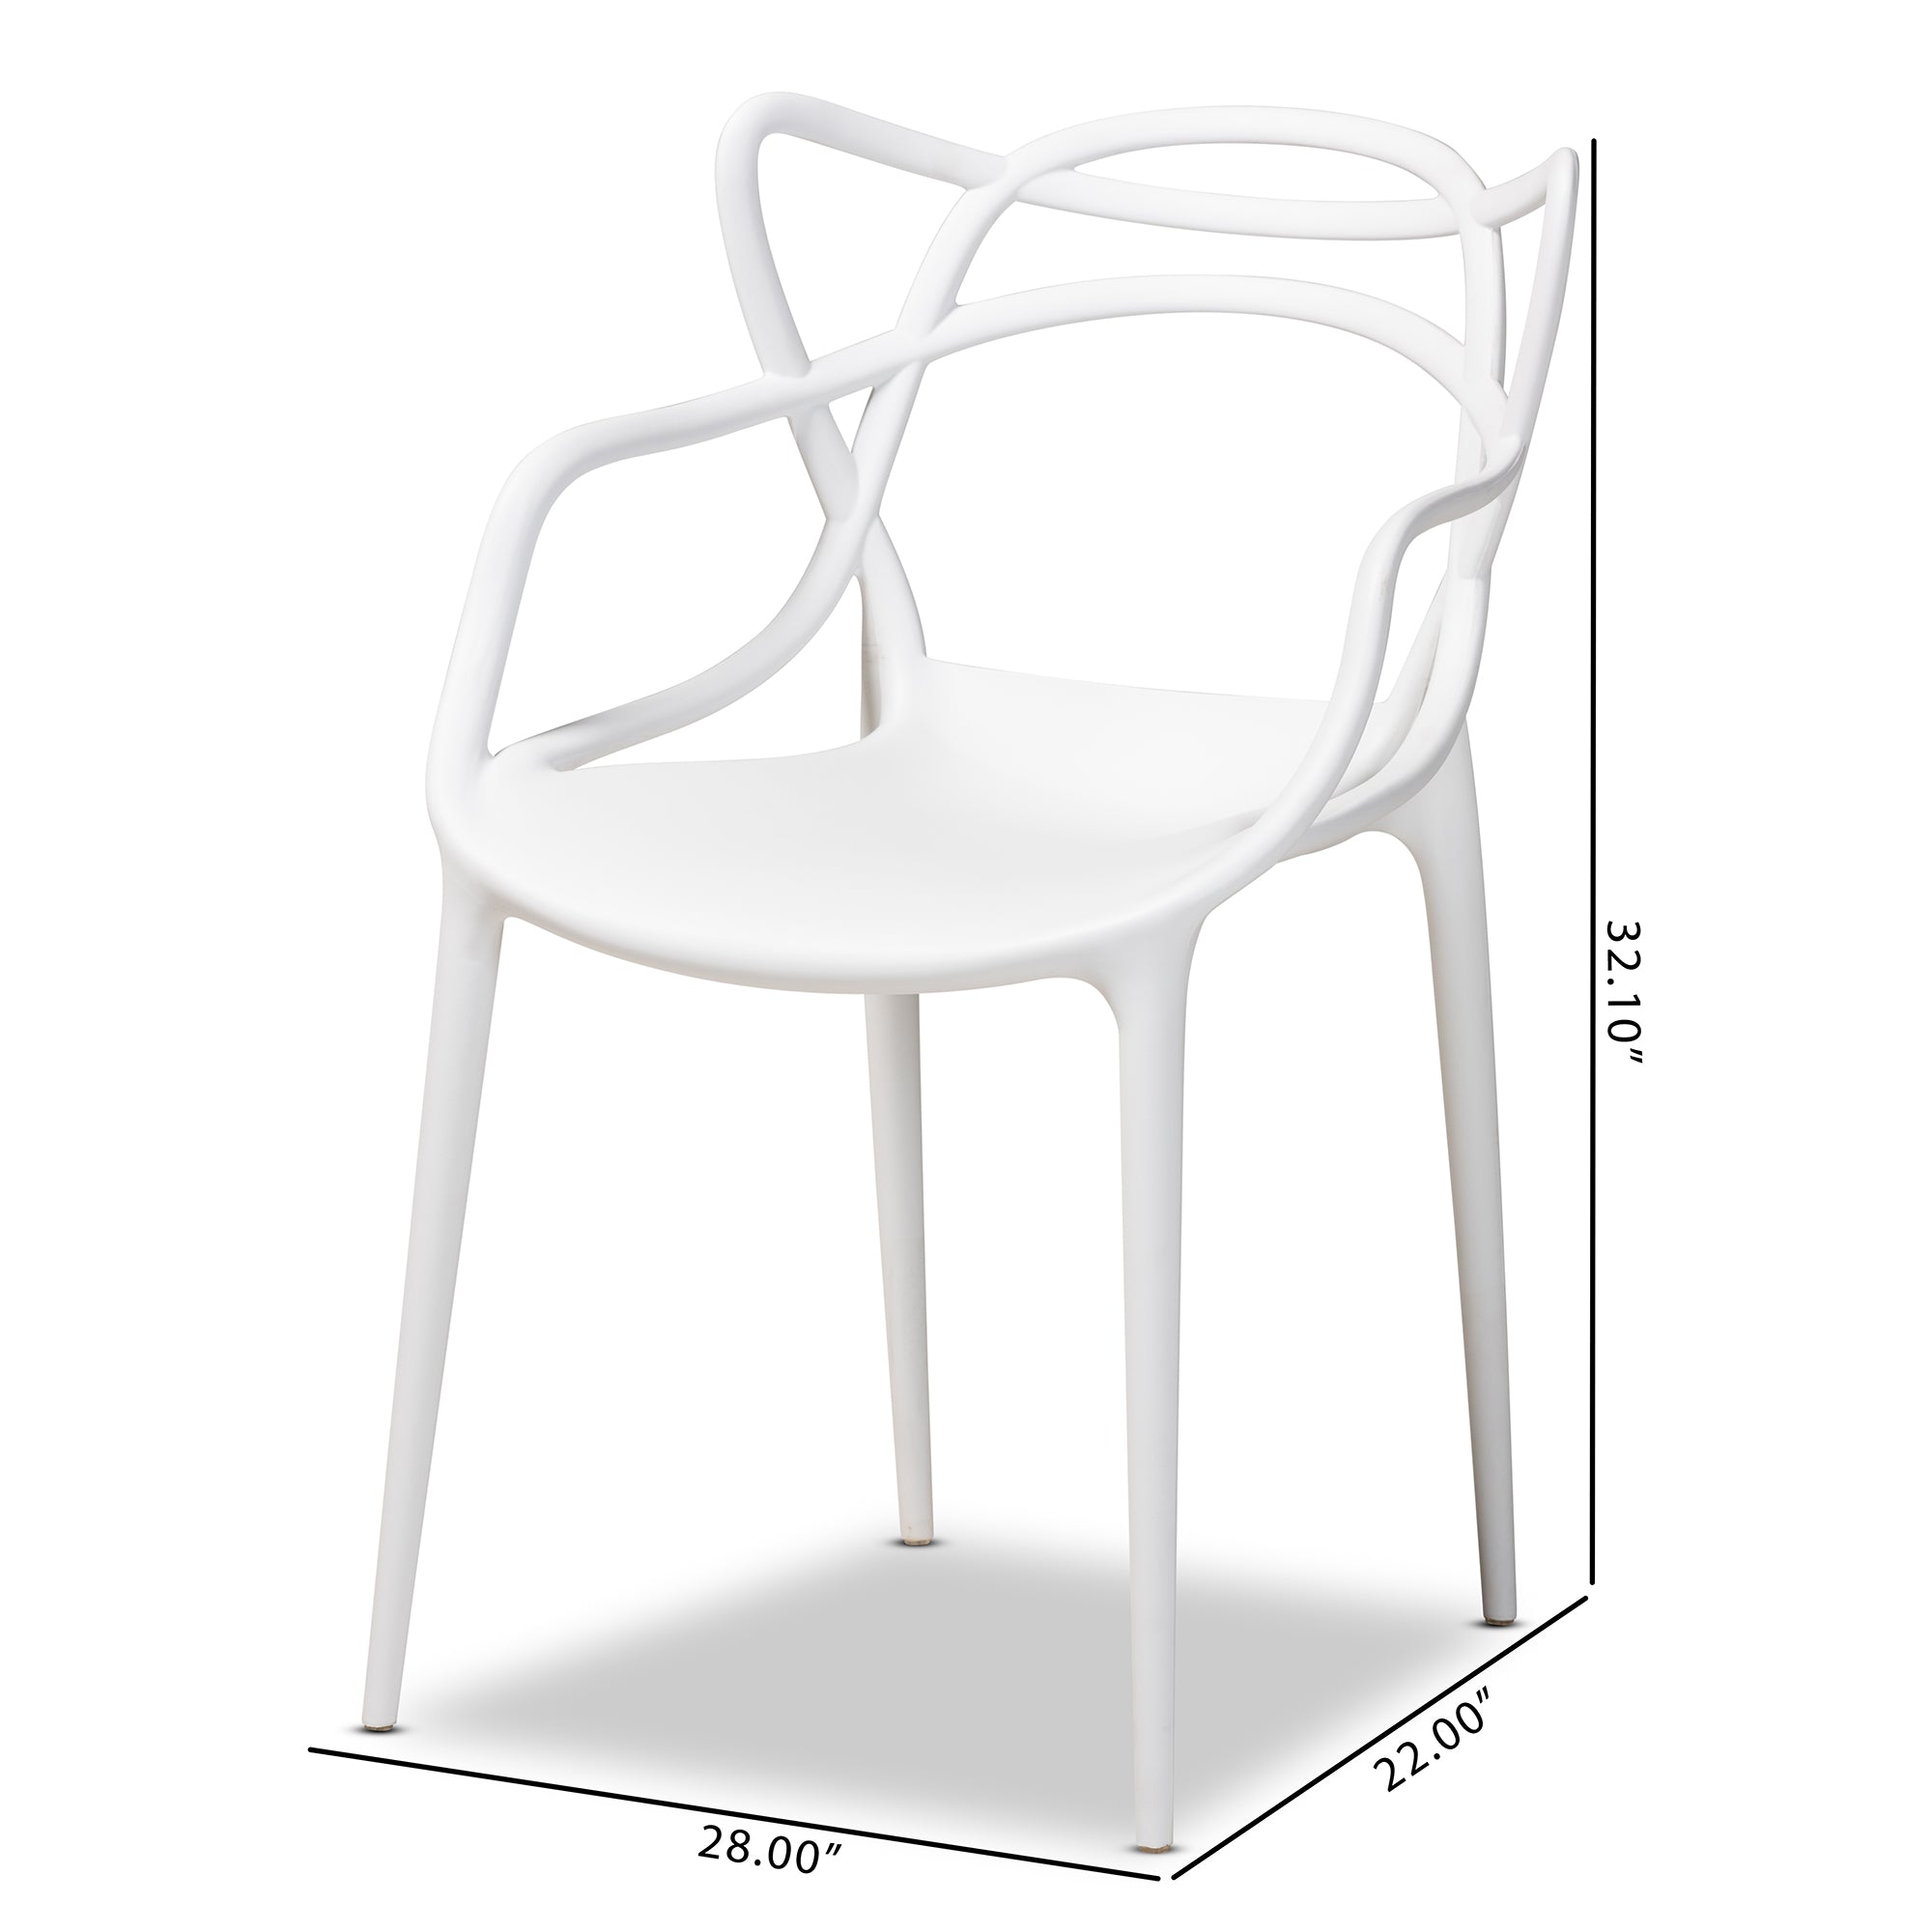 Landry Modern Dining Chairs 4-Piece-Dining Chairs-Baxton Studio - WI-Wall2Wall Furnishings